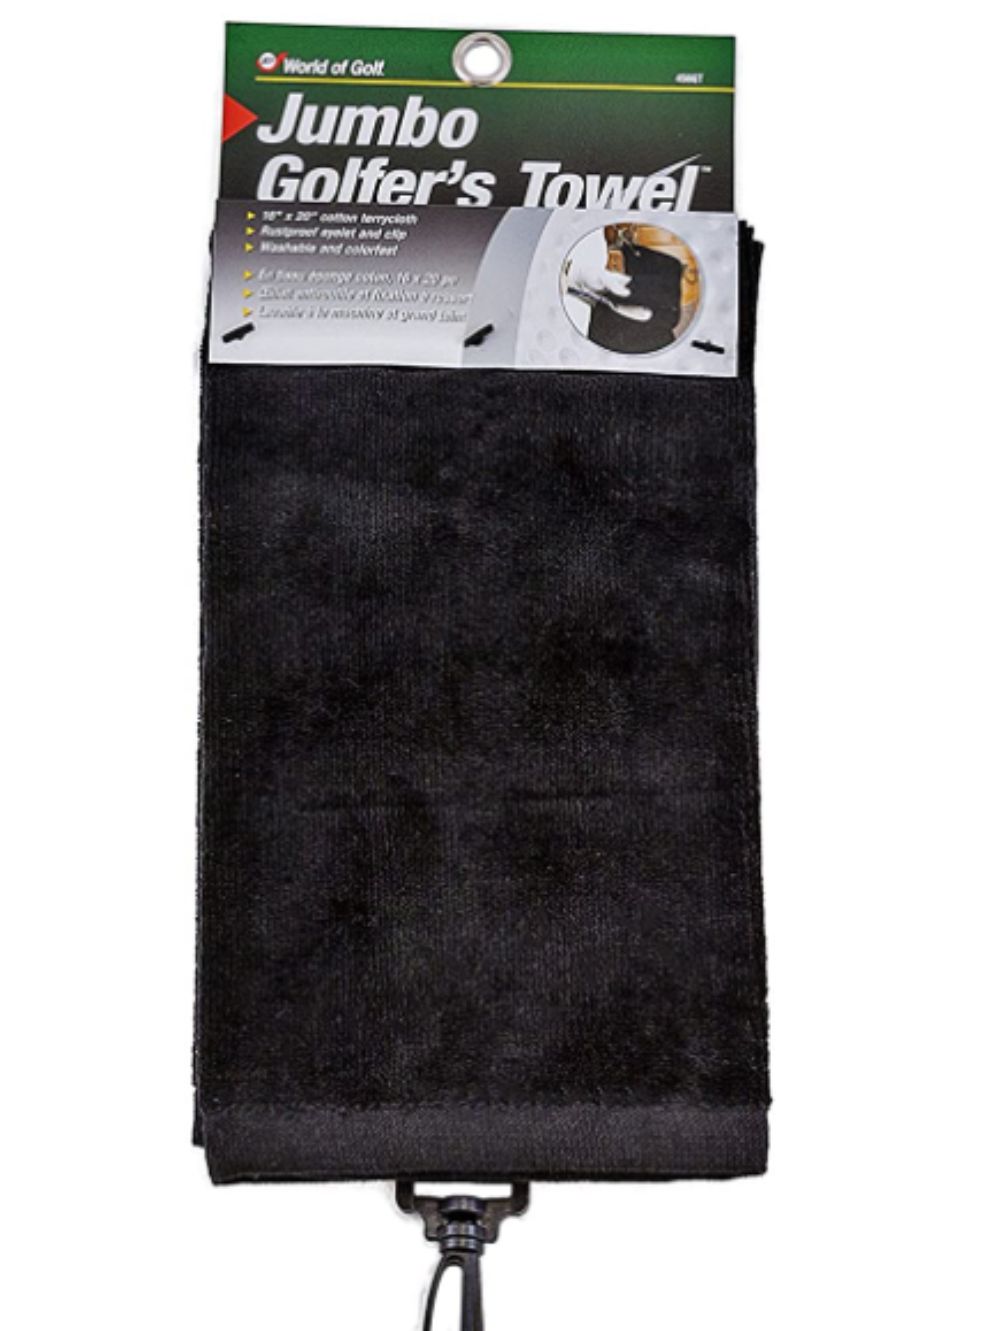 Golfer's Towel